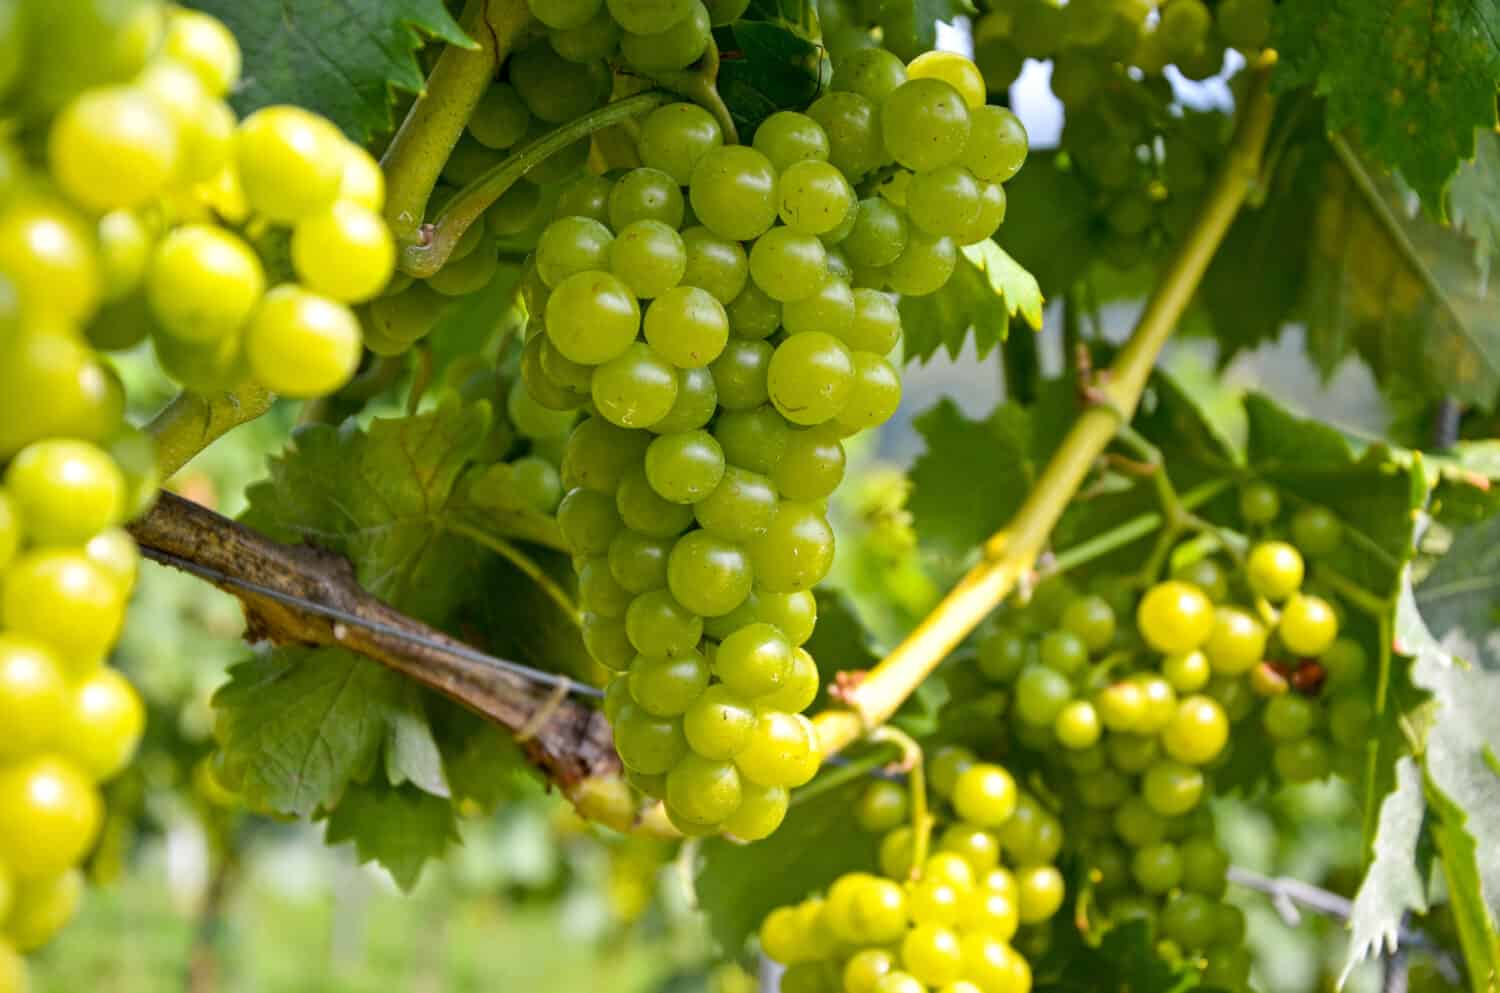 White wine: Vine with grapes just before harvest, Sauvignon Blanc grapevine